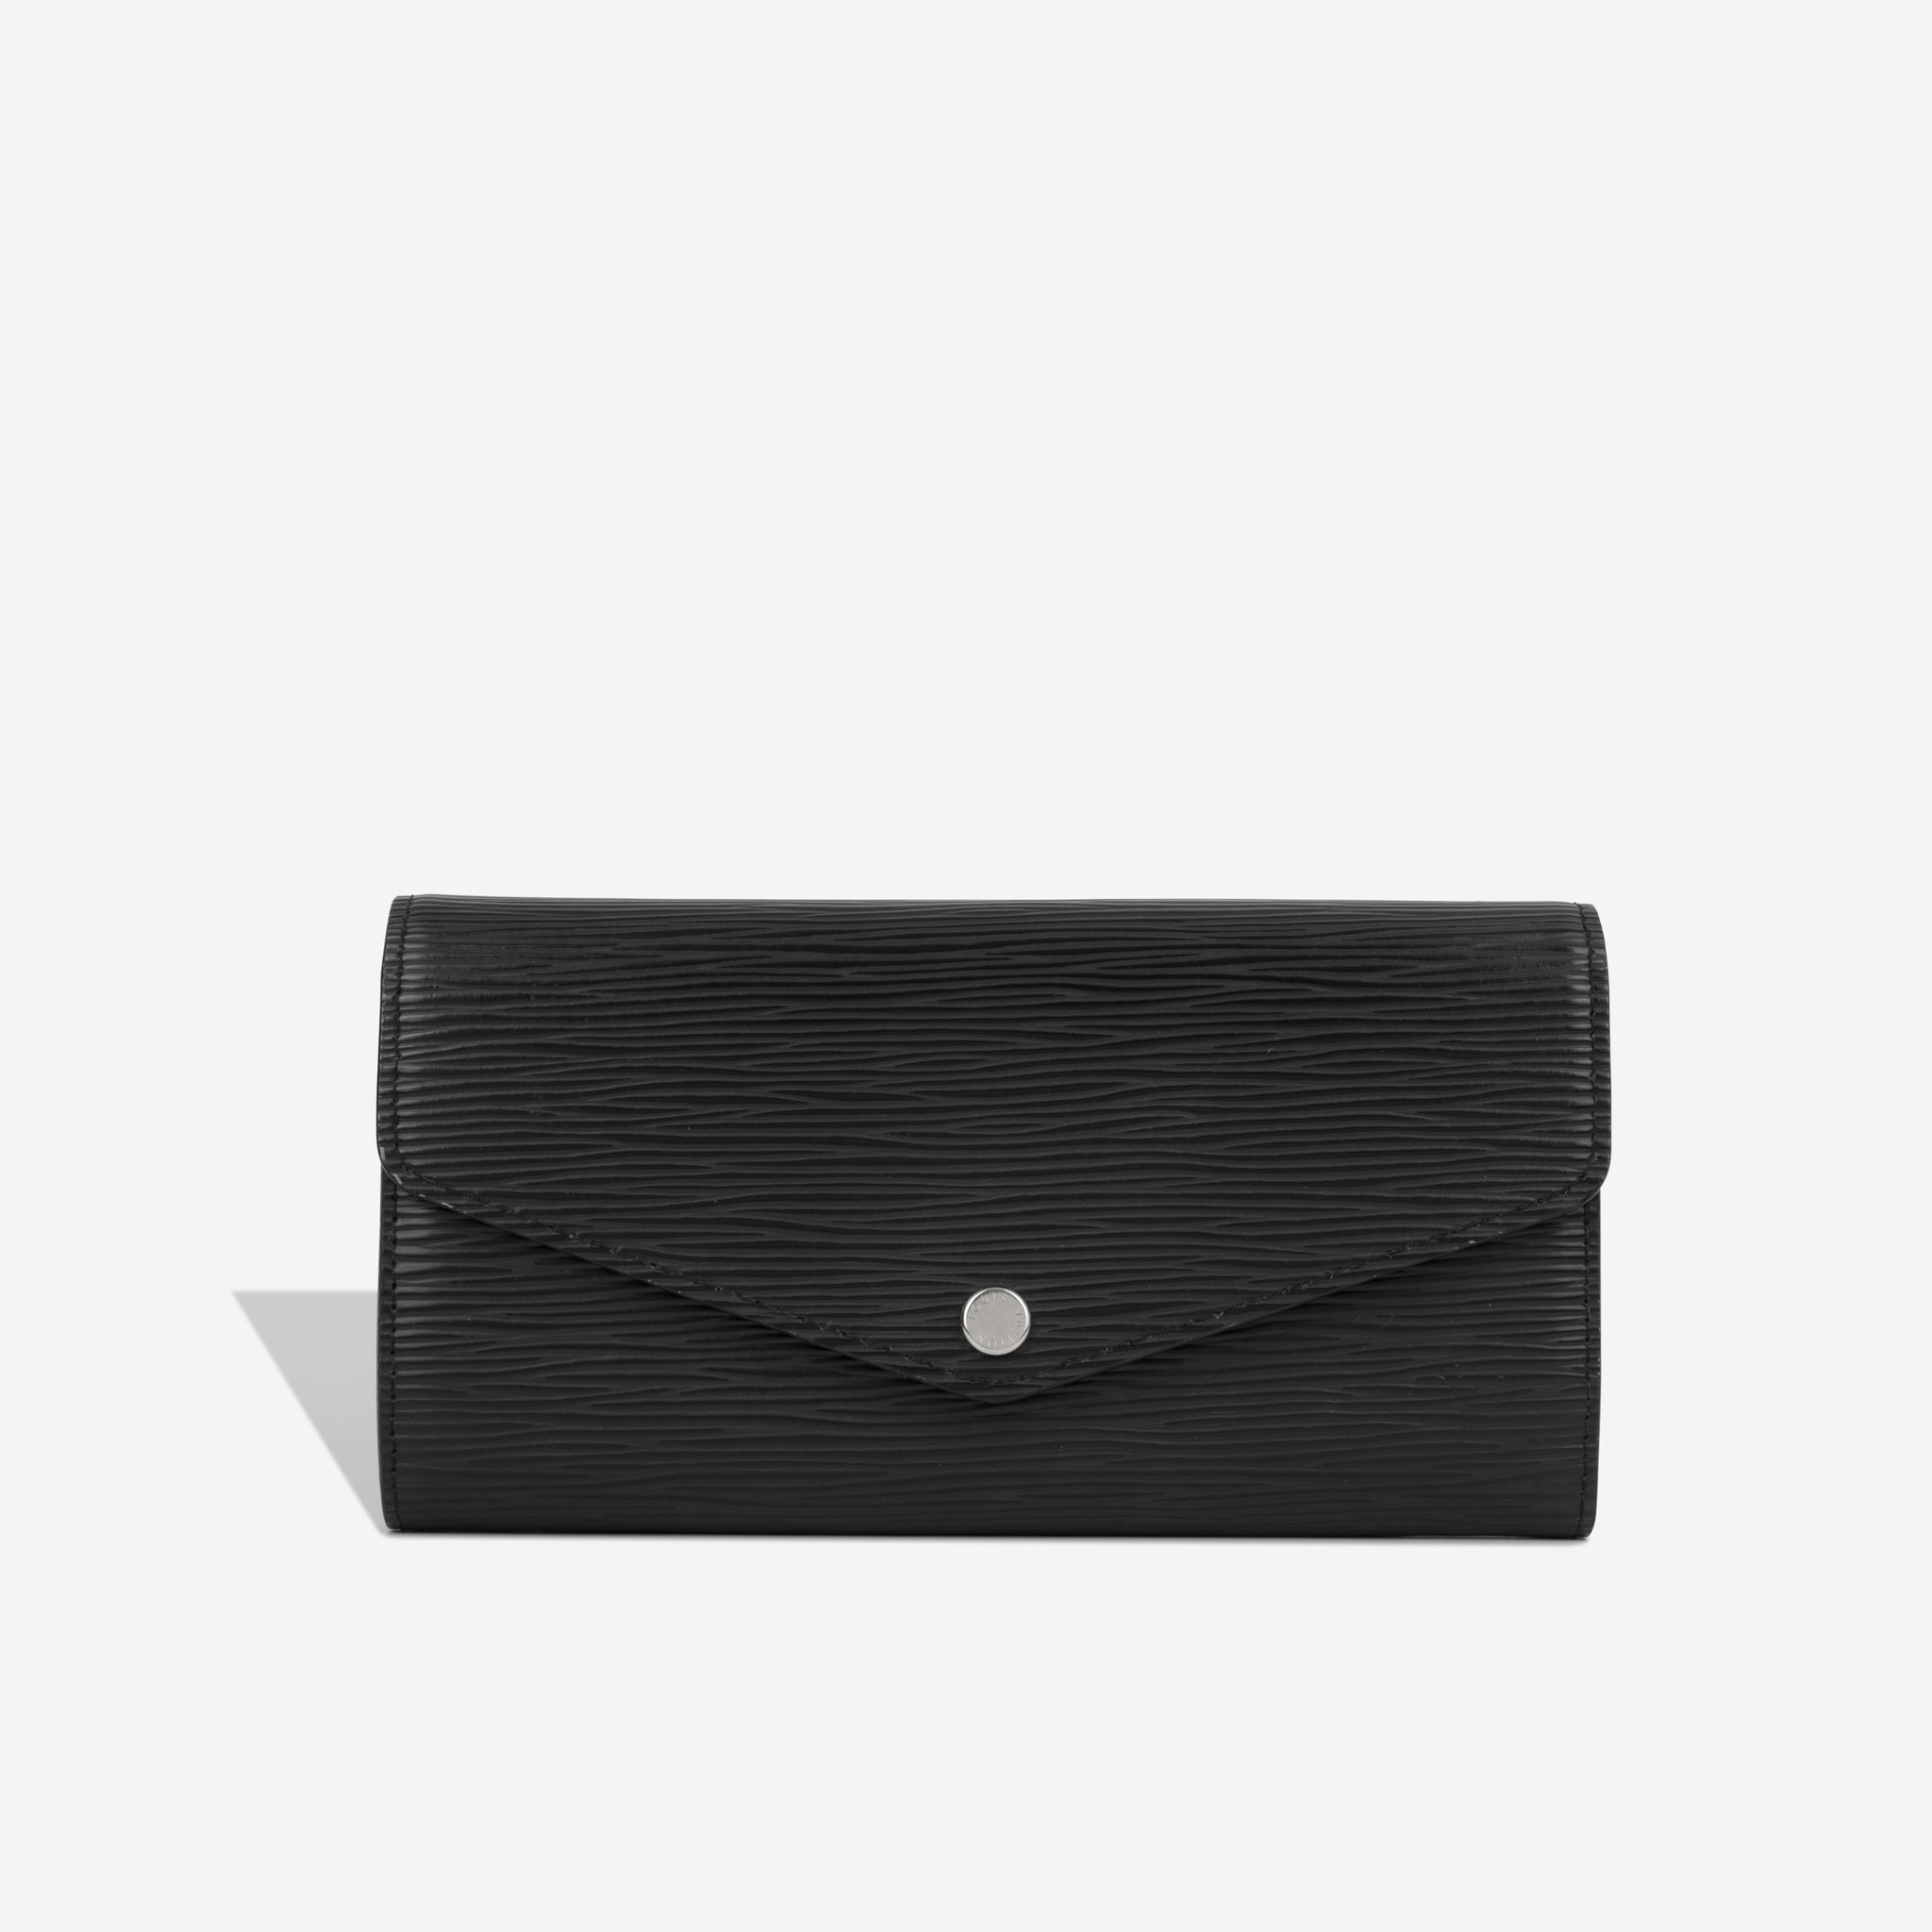 Louis Vuitton - Sarah Wallet - Black Epi Leather - SHW - Pre Loved